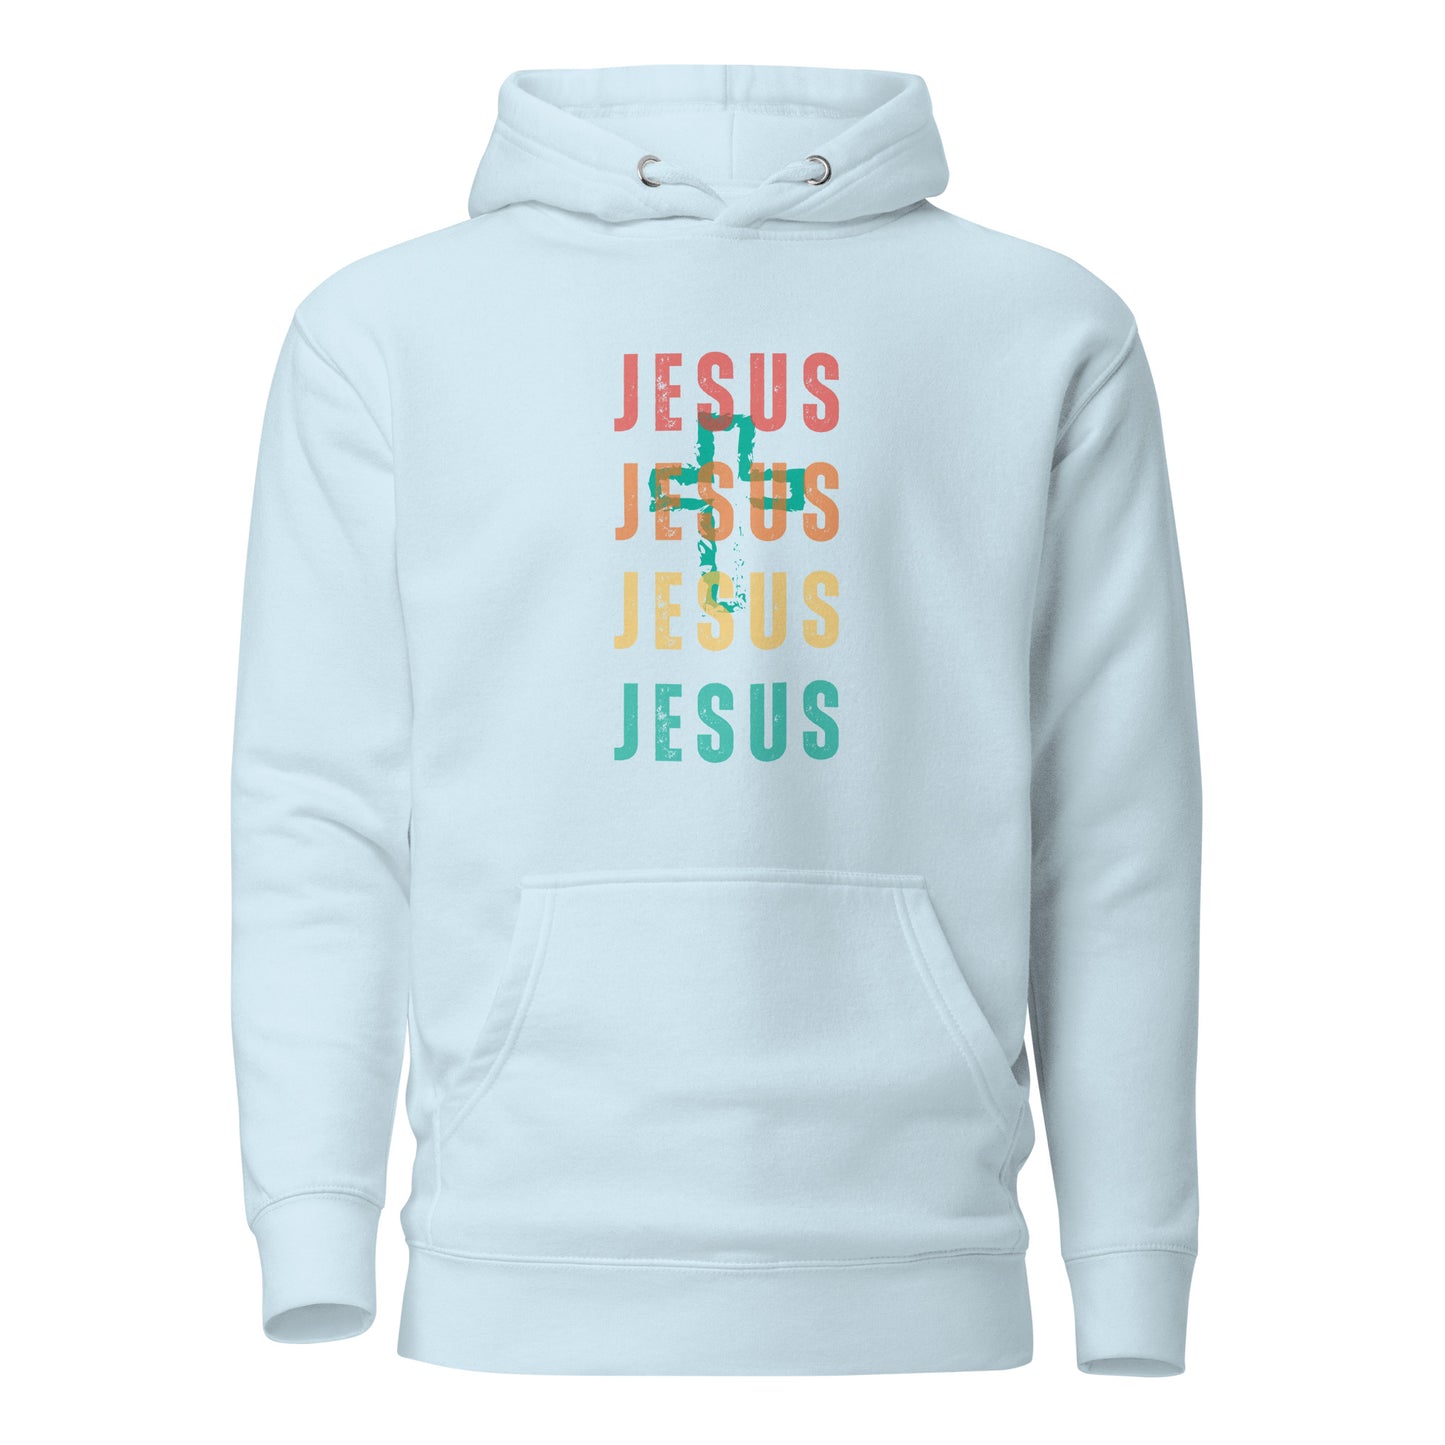 Jesus X4 Hooded Sweatshirt